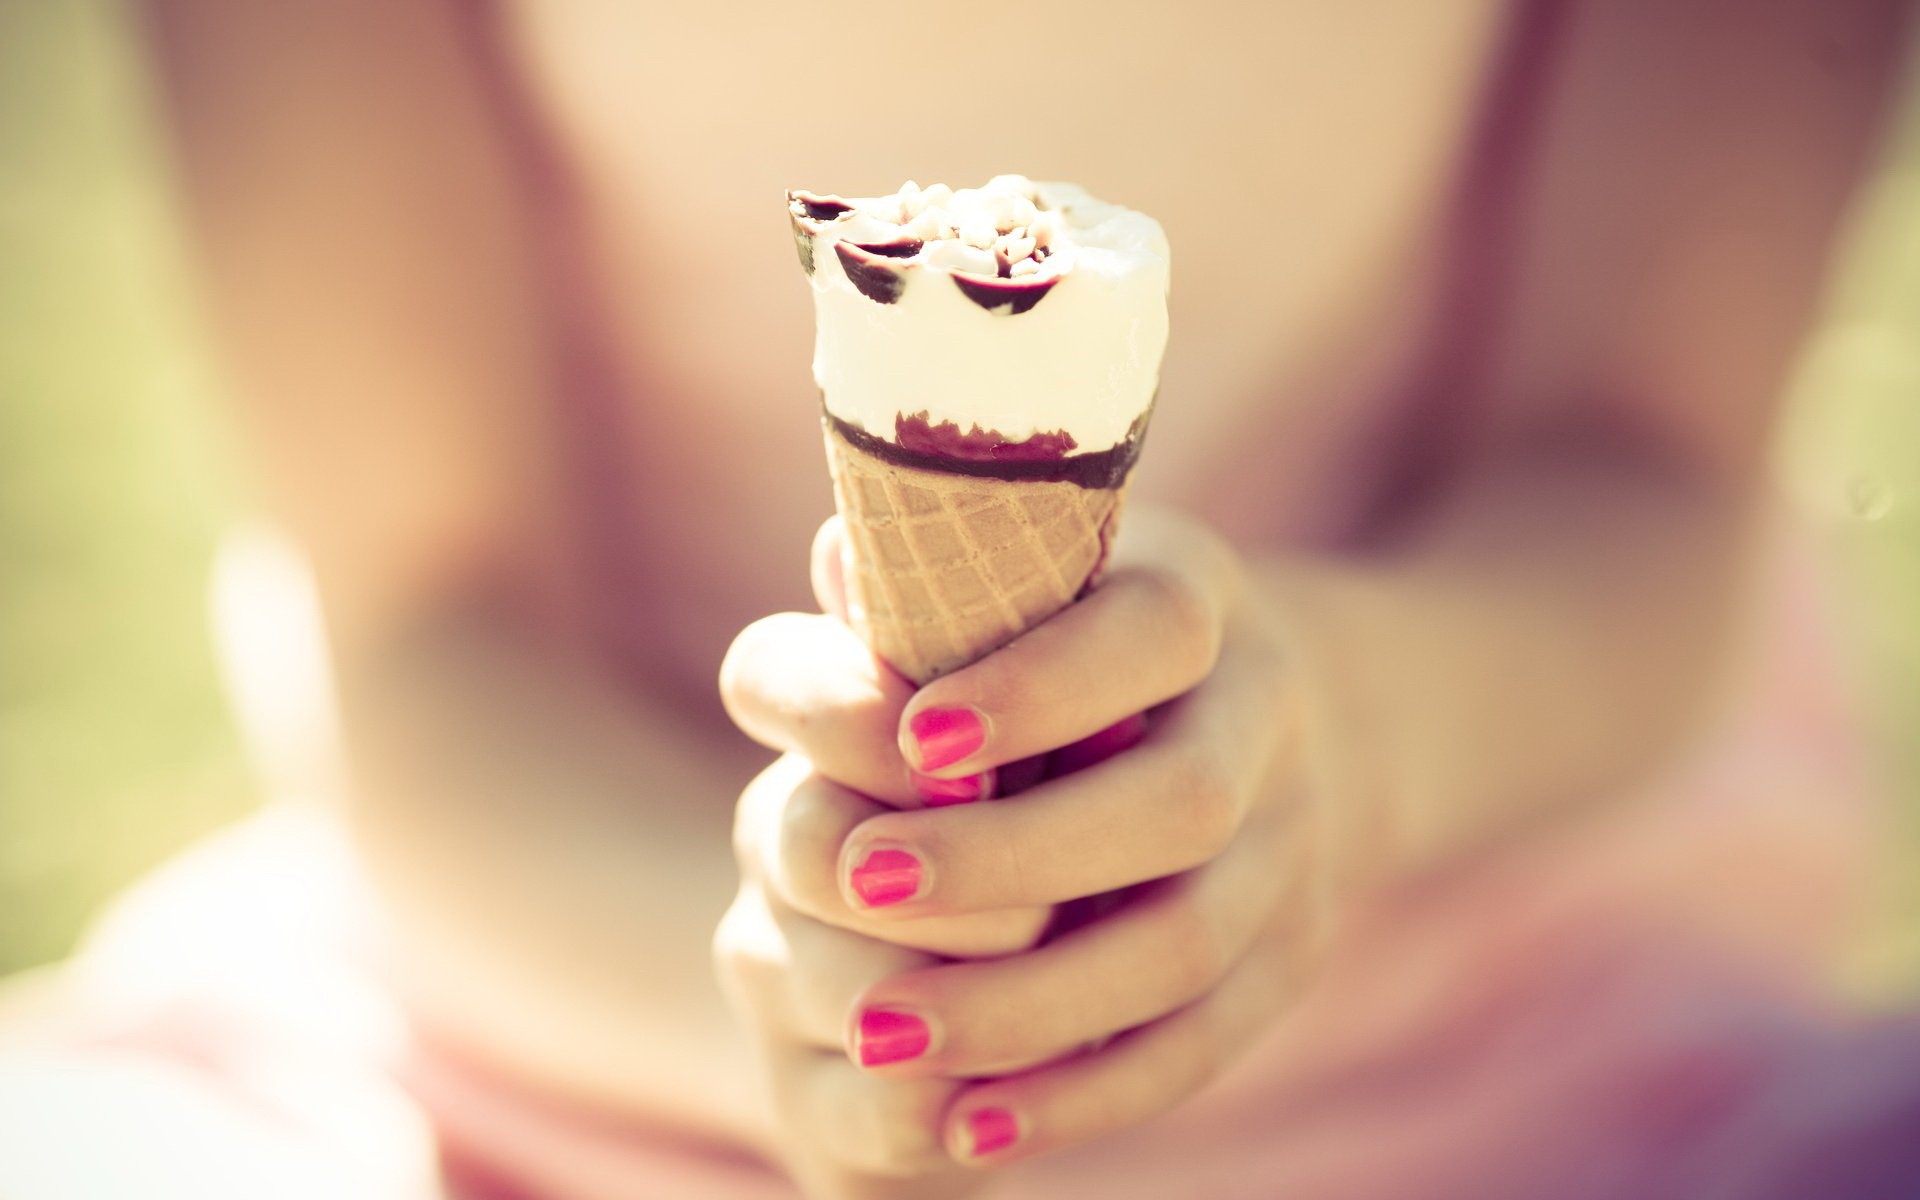 мороженое, руки, лето - обои на рабочий стол